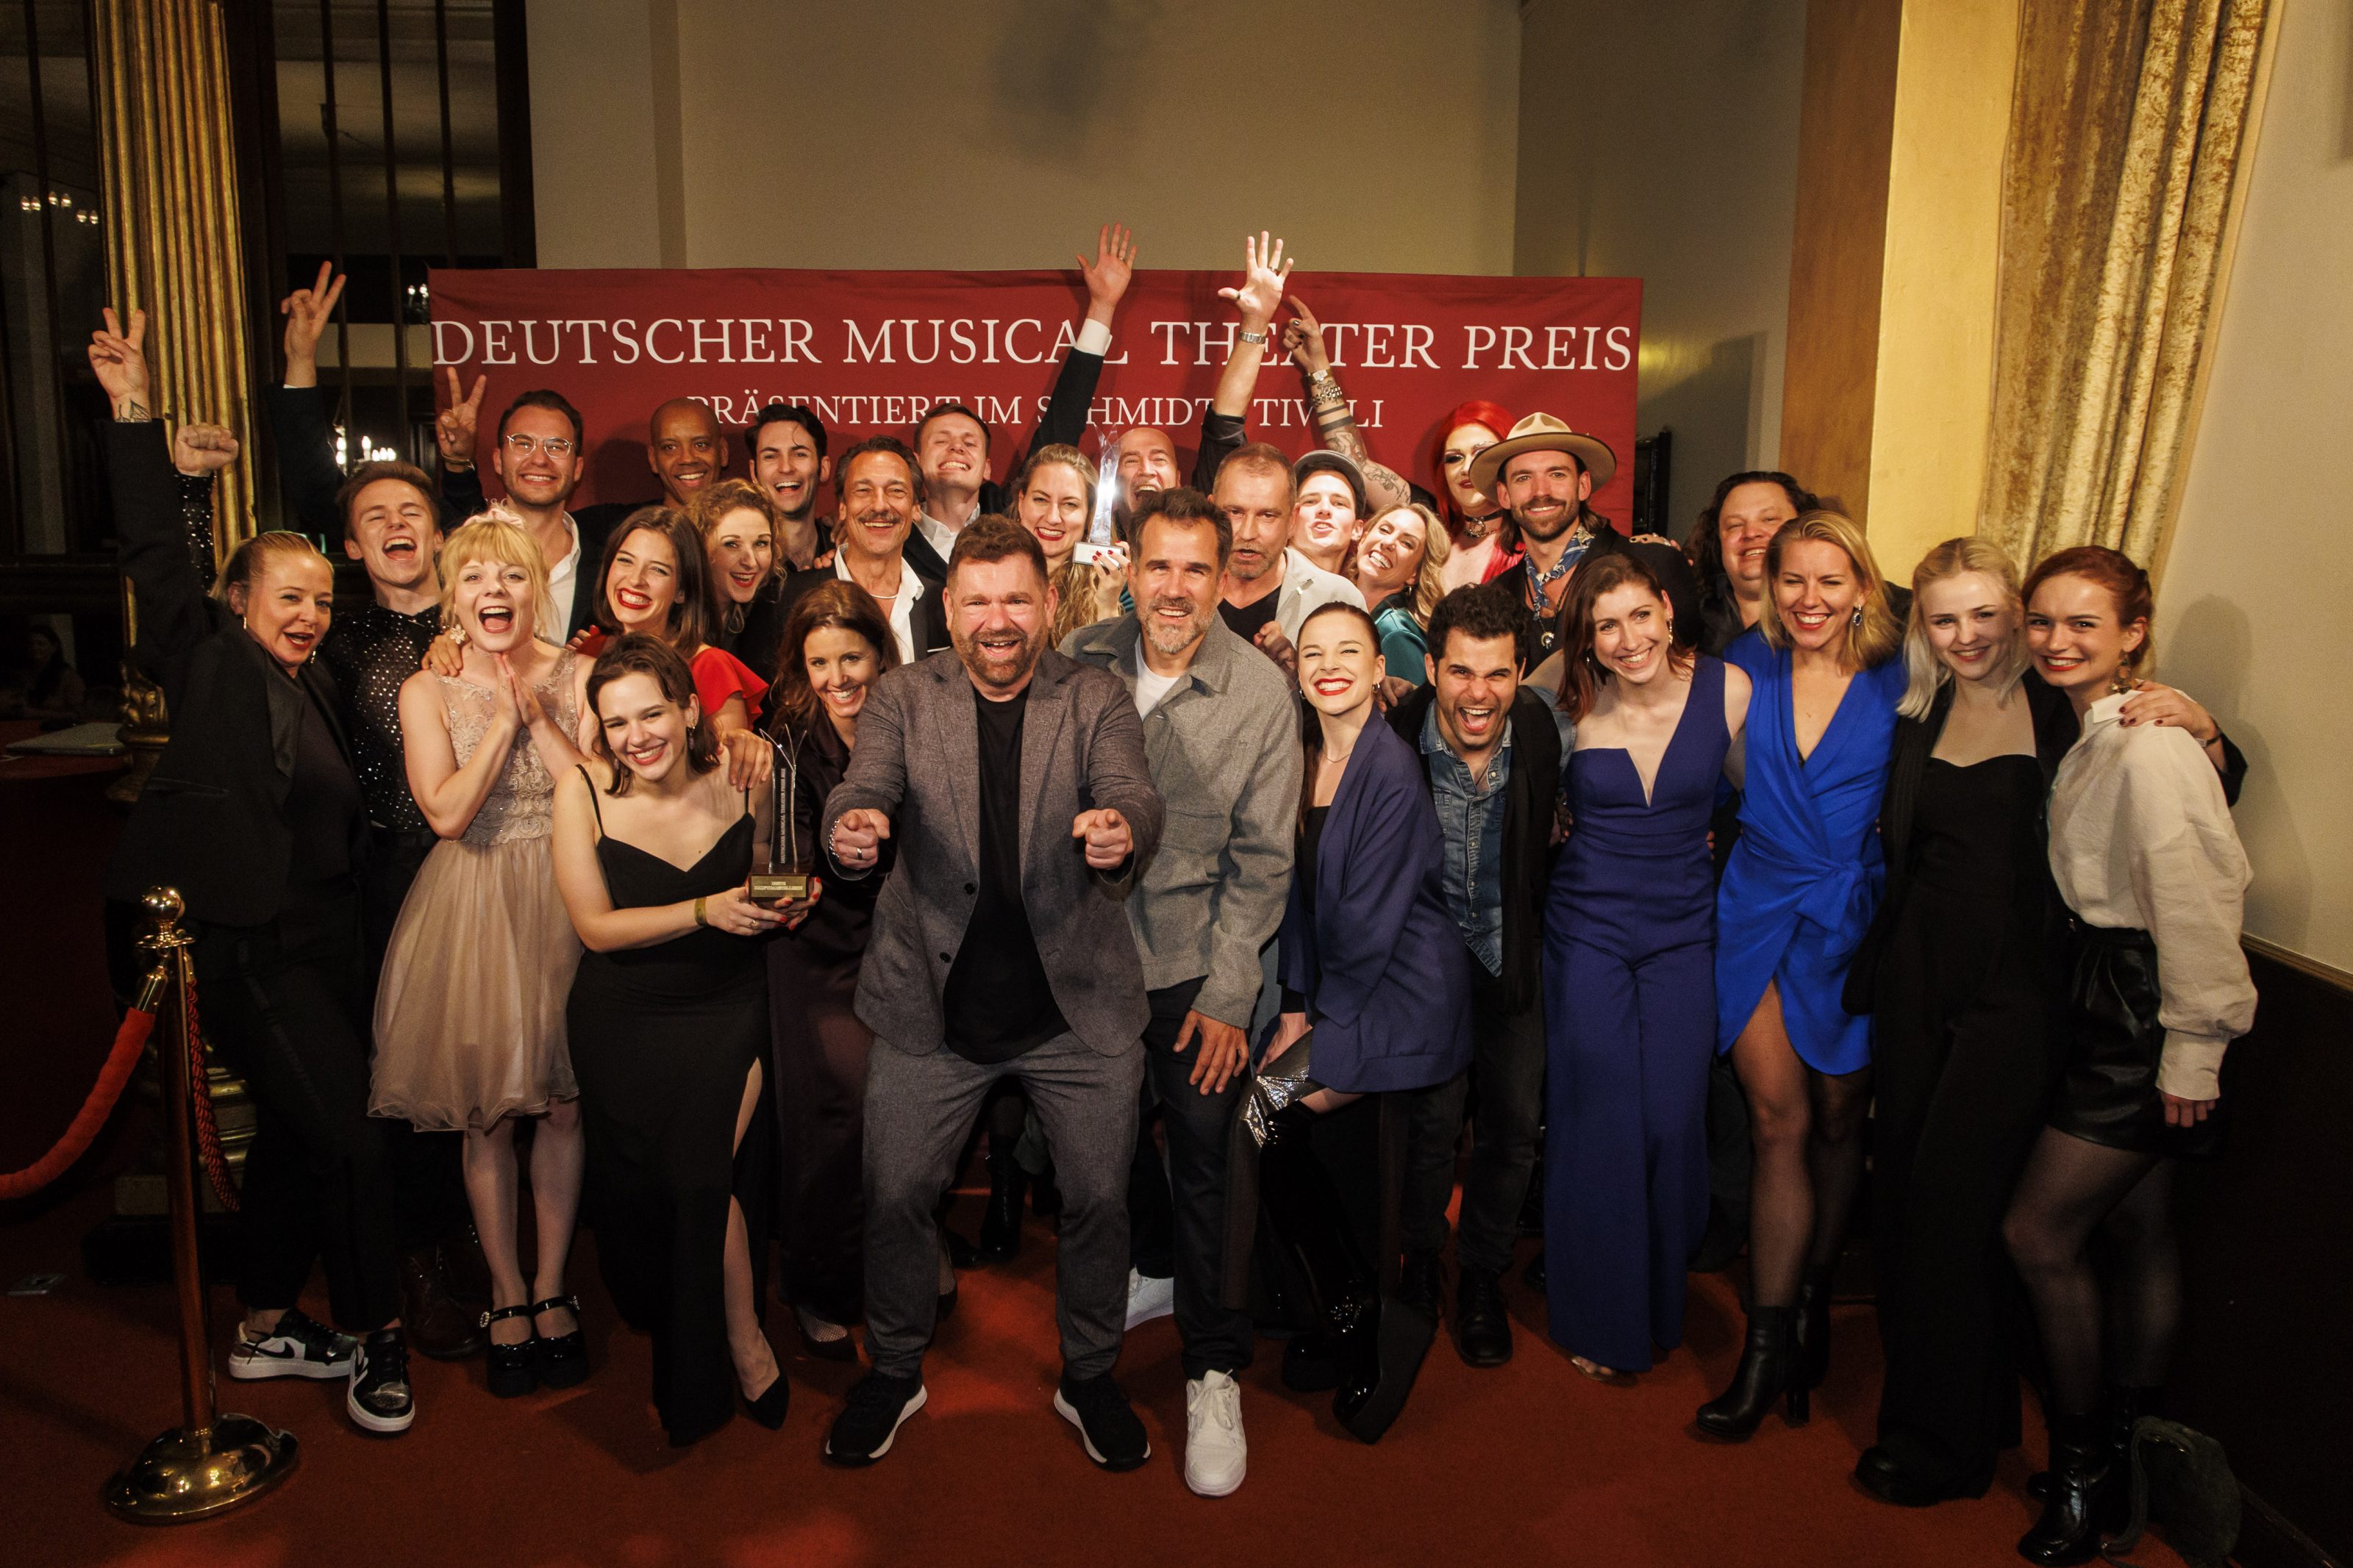 TIVOLI: Deutscher Musical Theater Preis 2022 - Die Gala im Schmidts Tivoli in Hamburg